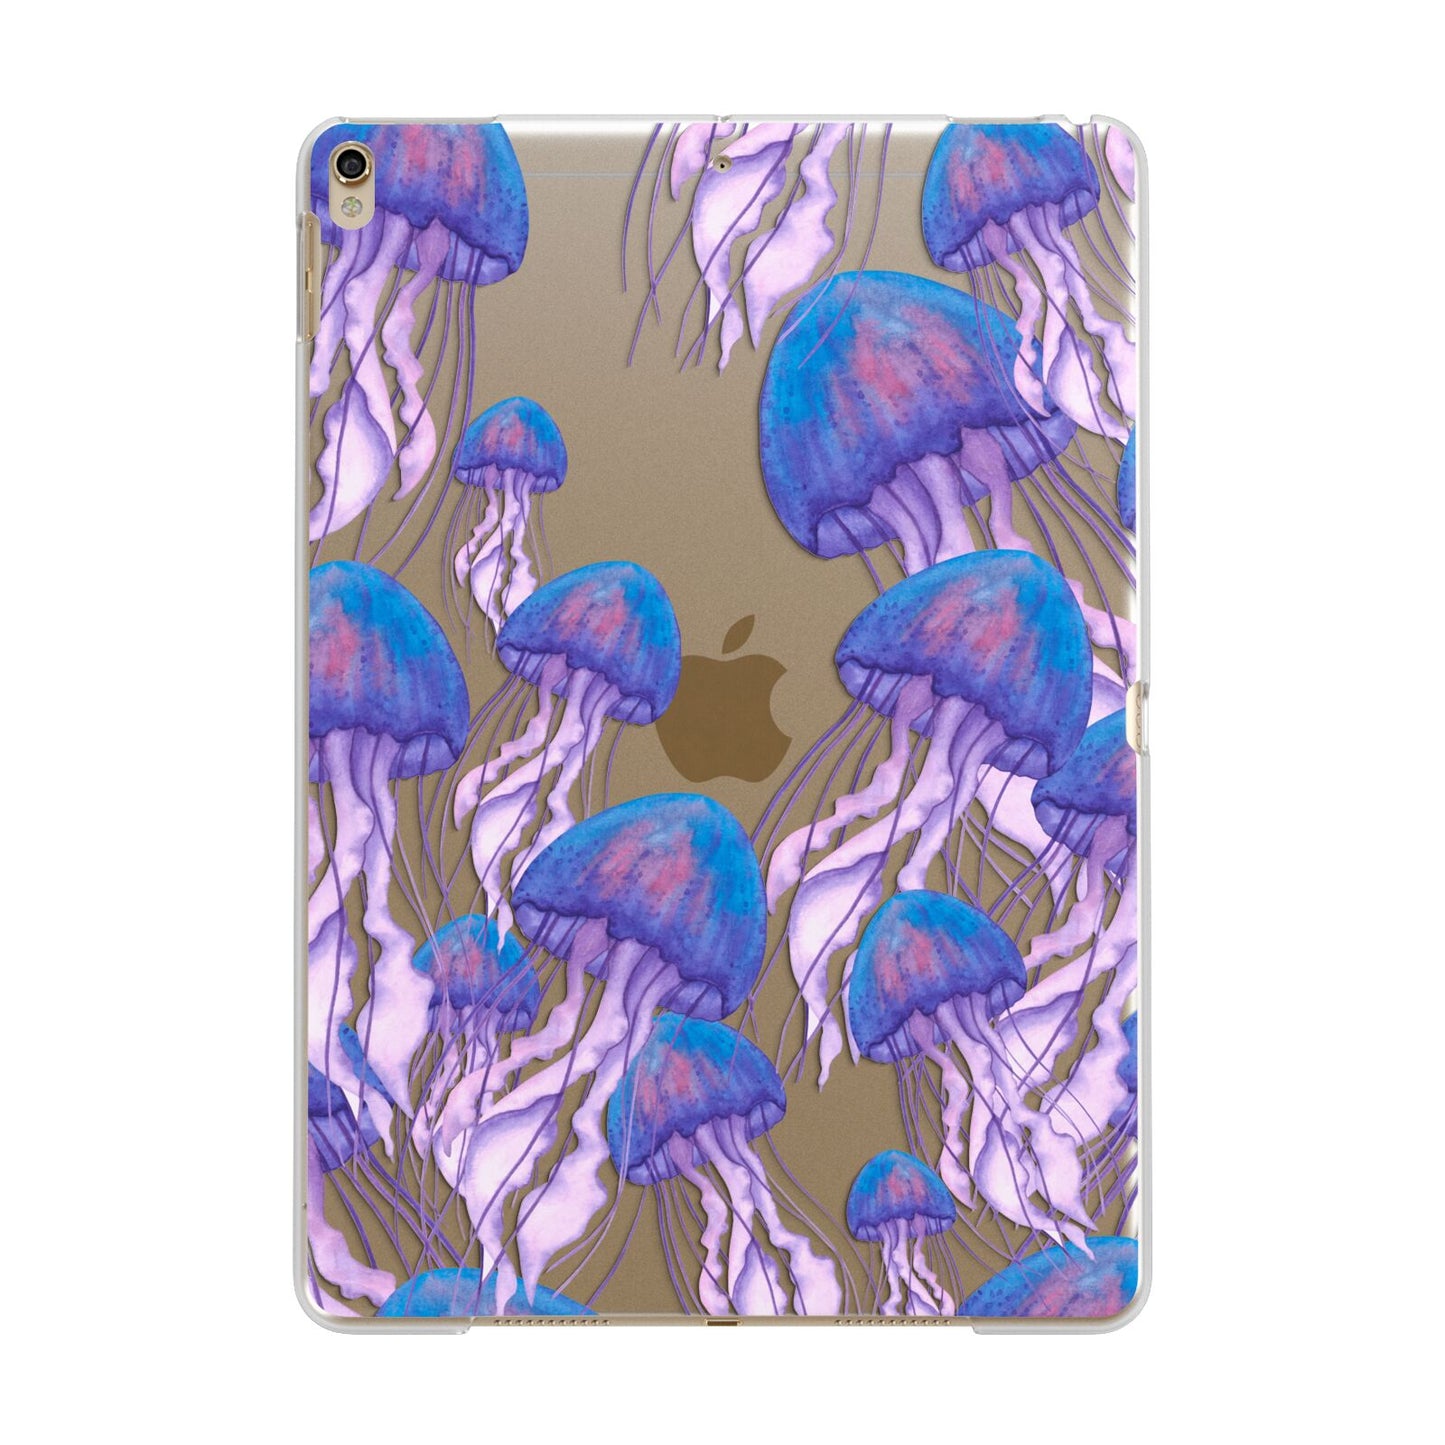 Jellyfish Apple iPad Gold Case